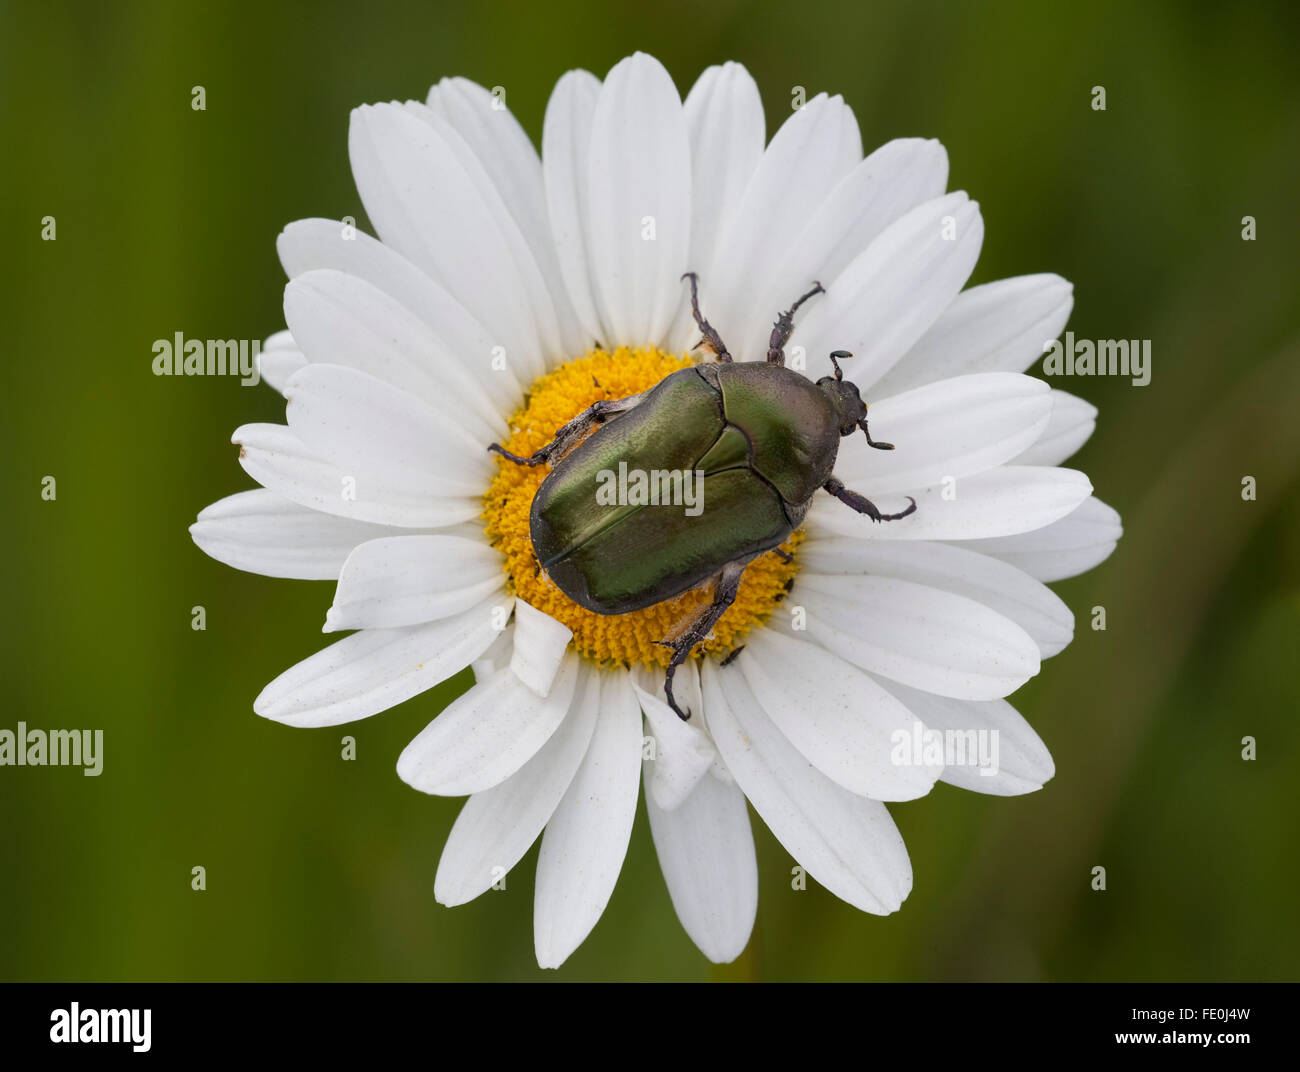 Rose Chafer Beetle, Cetonia aurata, Finland Stock Photo